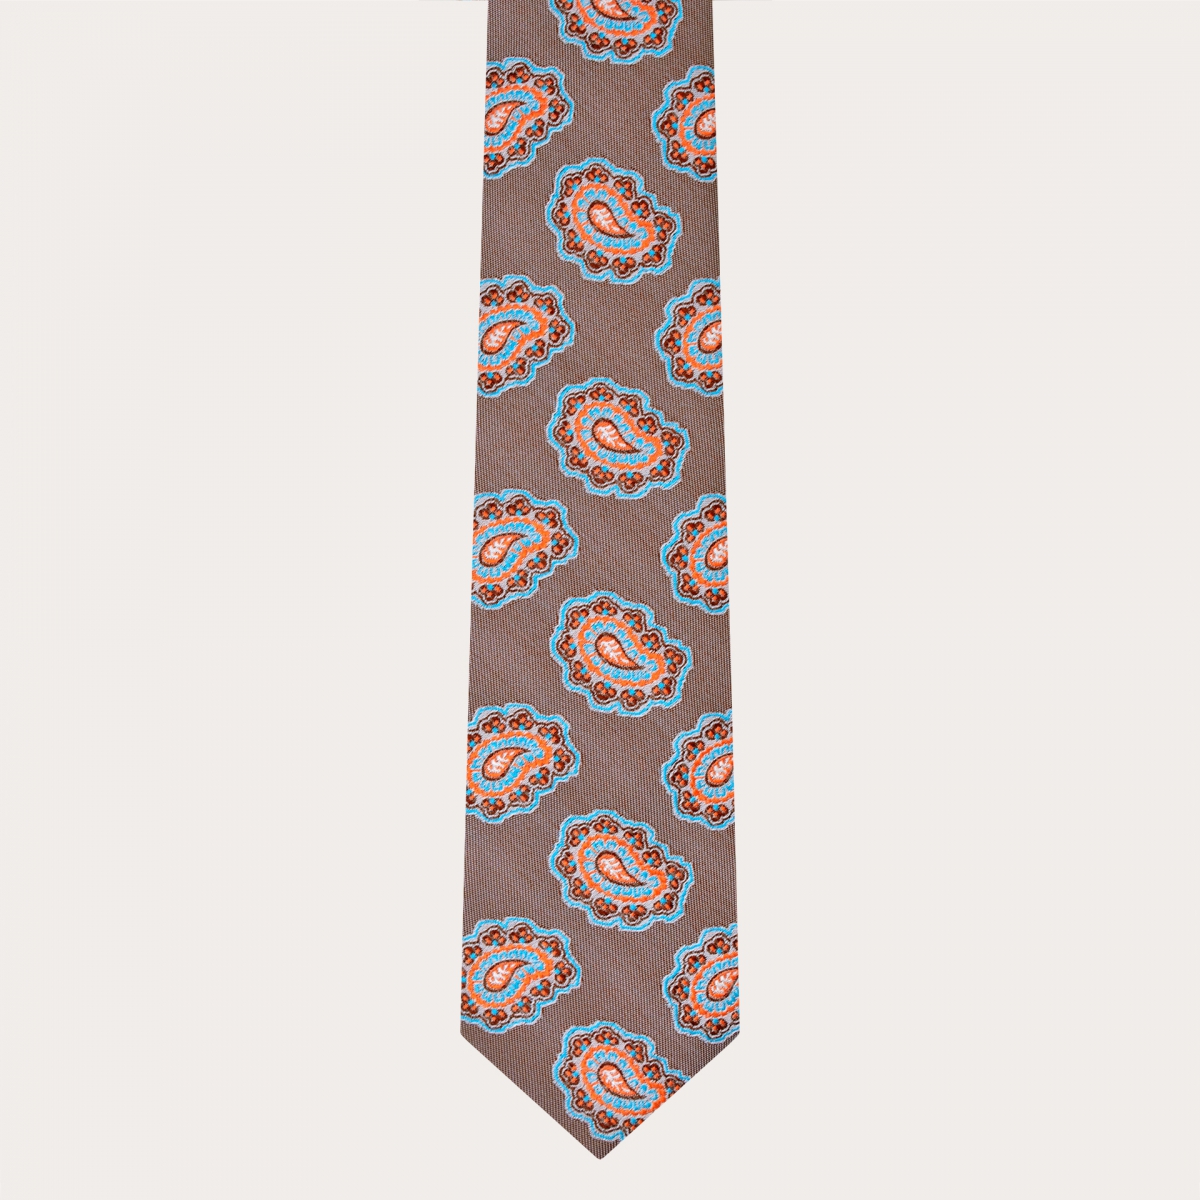 BRUCLE Esclusiva cravatta in seta con fantasia paisley, tortora